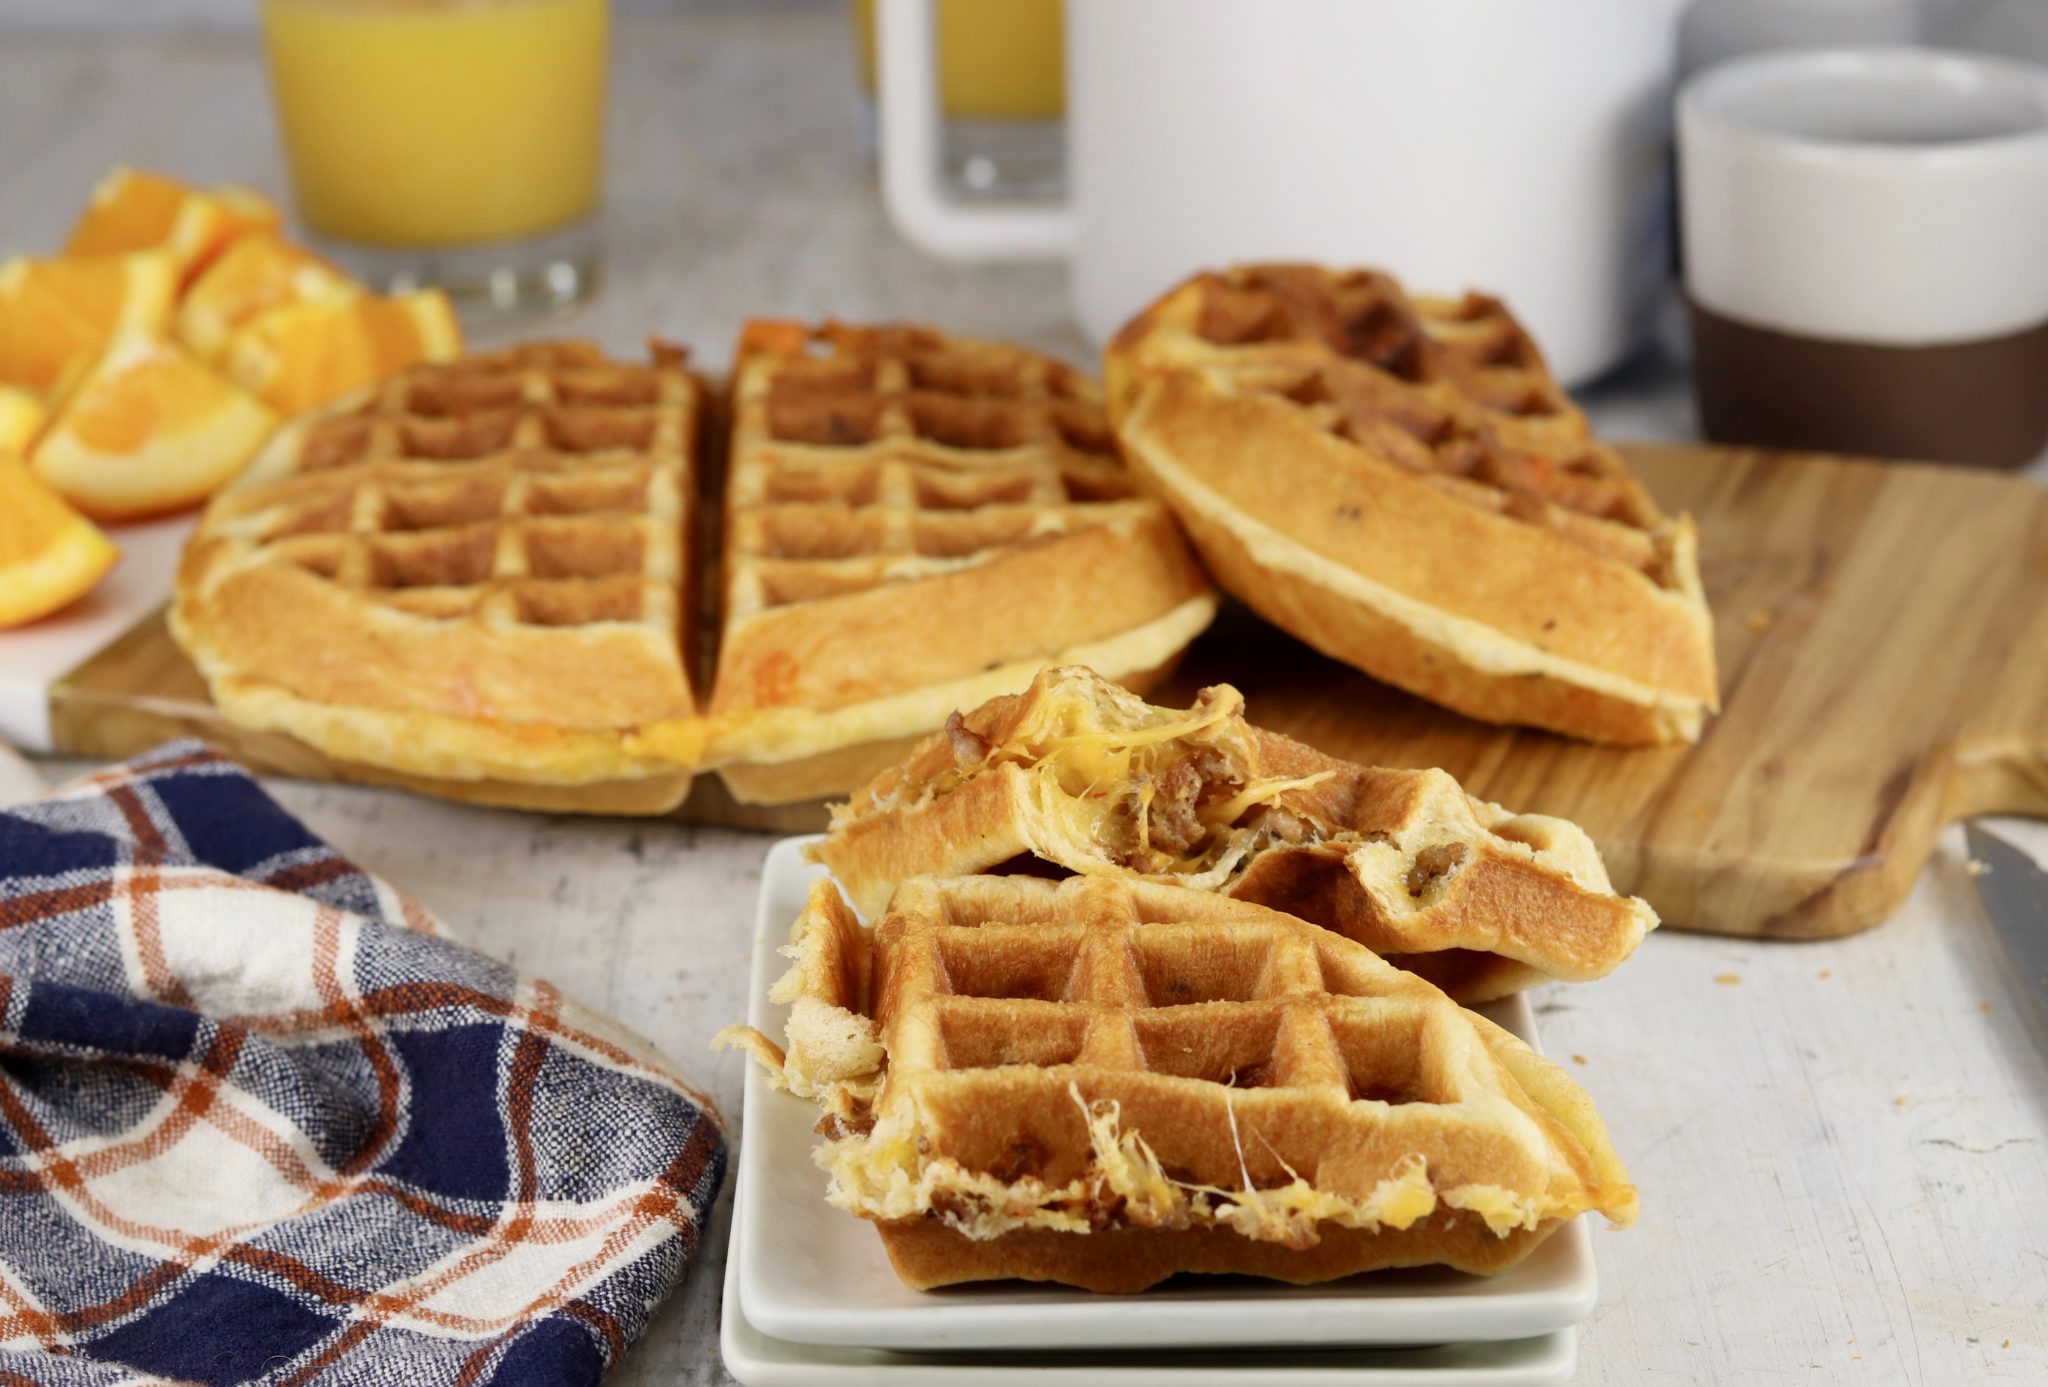 https://www.missinthekitchen.com/wp-content/uploads/2019/11/Stuffed-Waffles-Recipe-Image-H-scaled.jpg